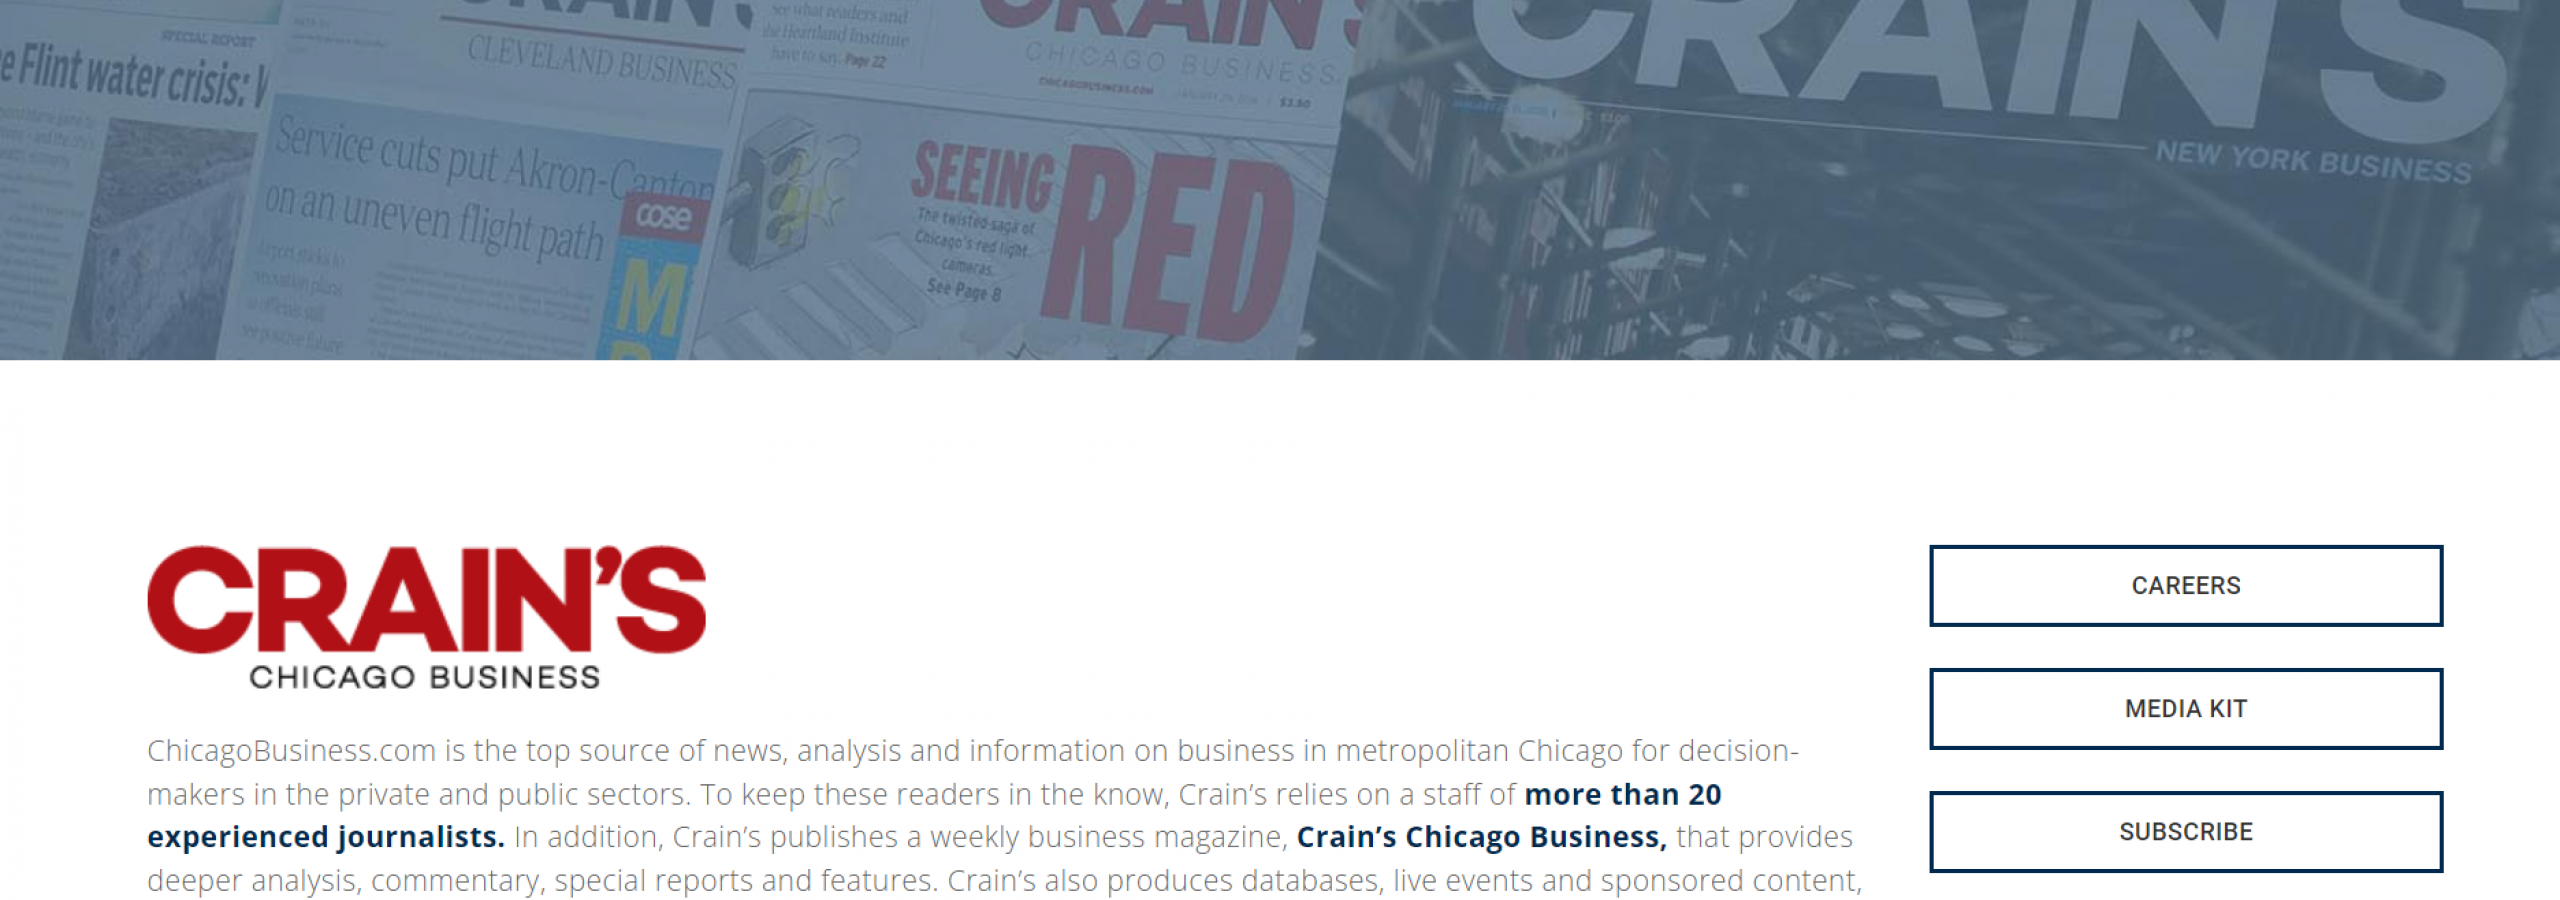 crain's chicago business web site